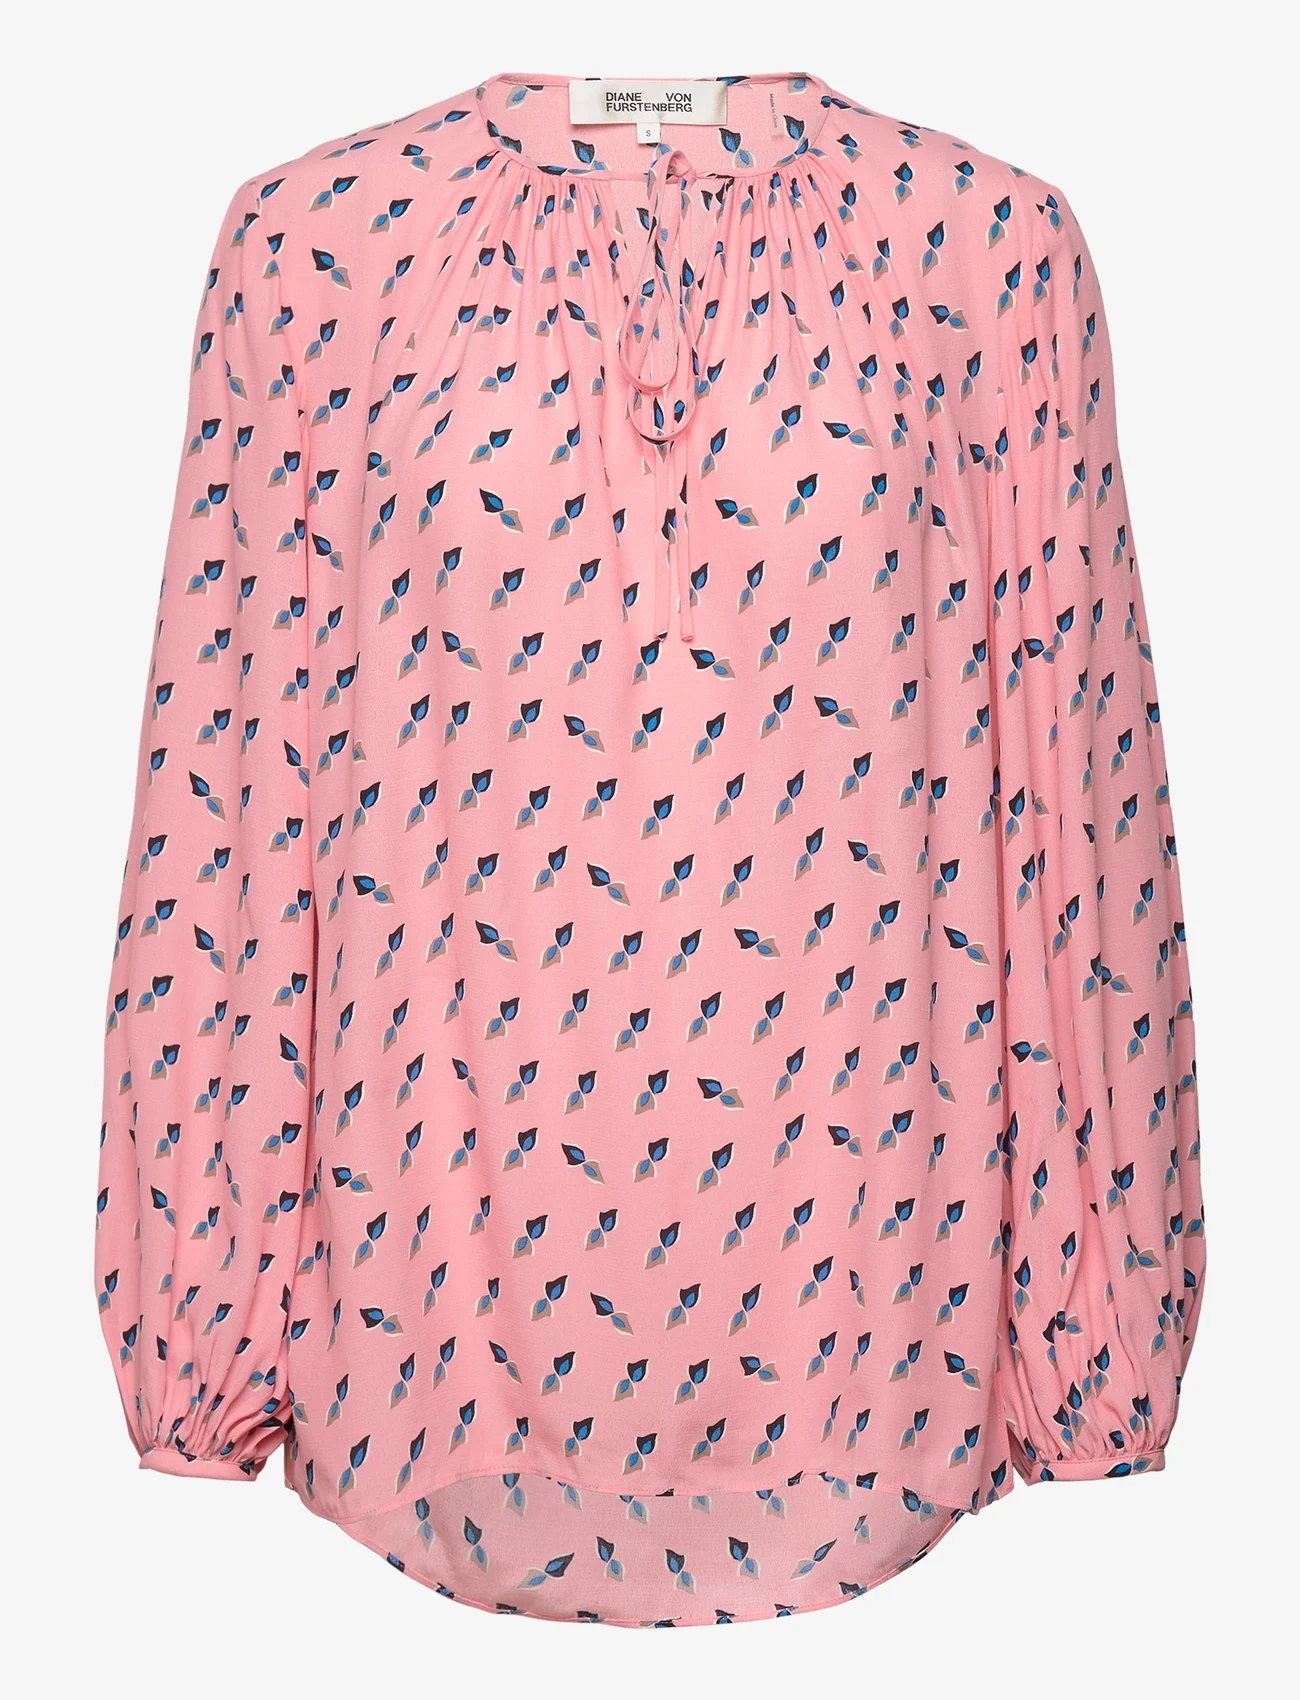 Diane von Furstenberg - DVF NEW FREDDIE BLOUSE - long-sleeved blouses - twisted geo soft pink - 0